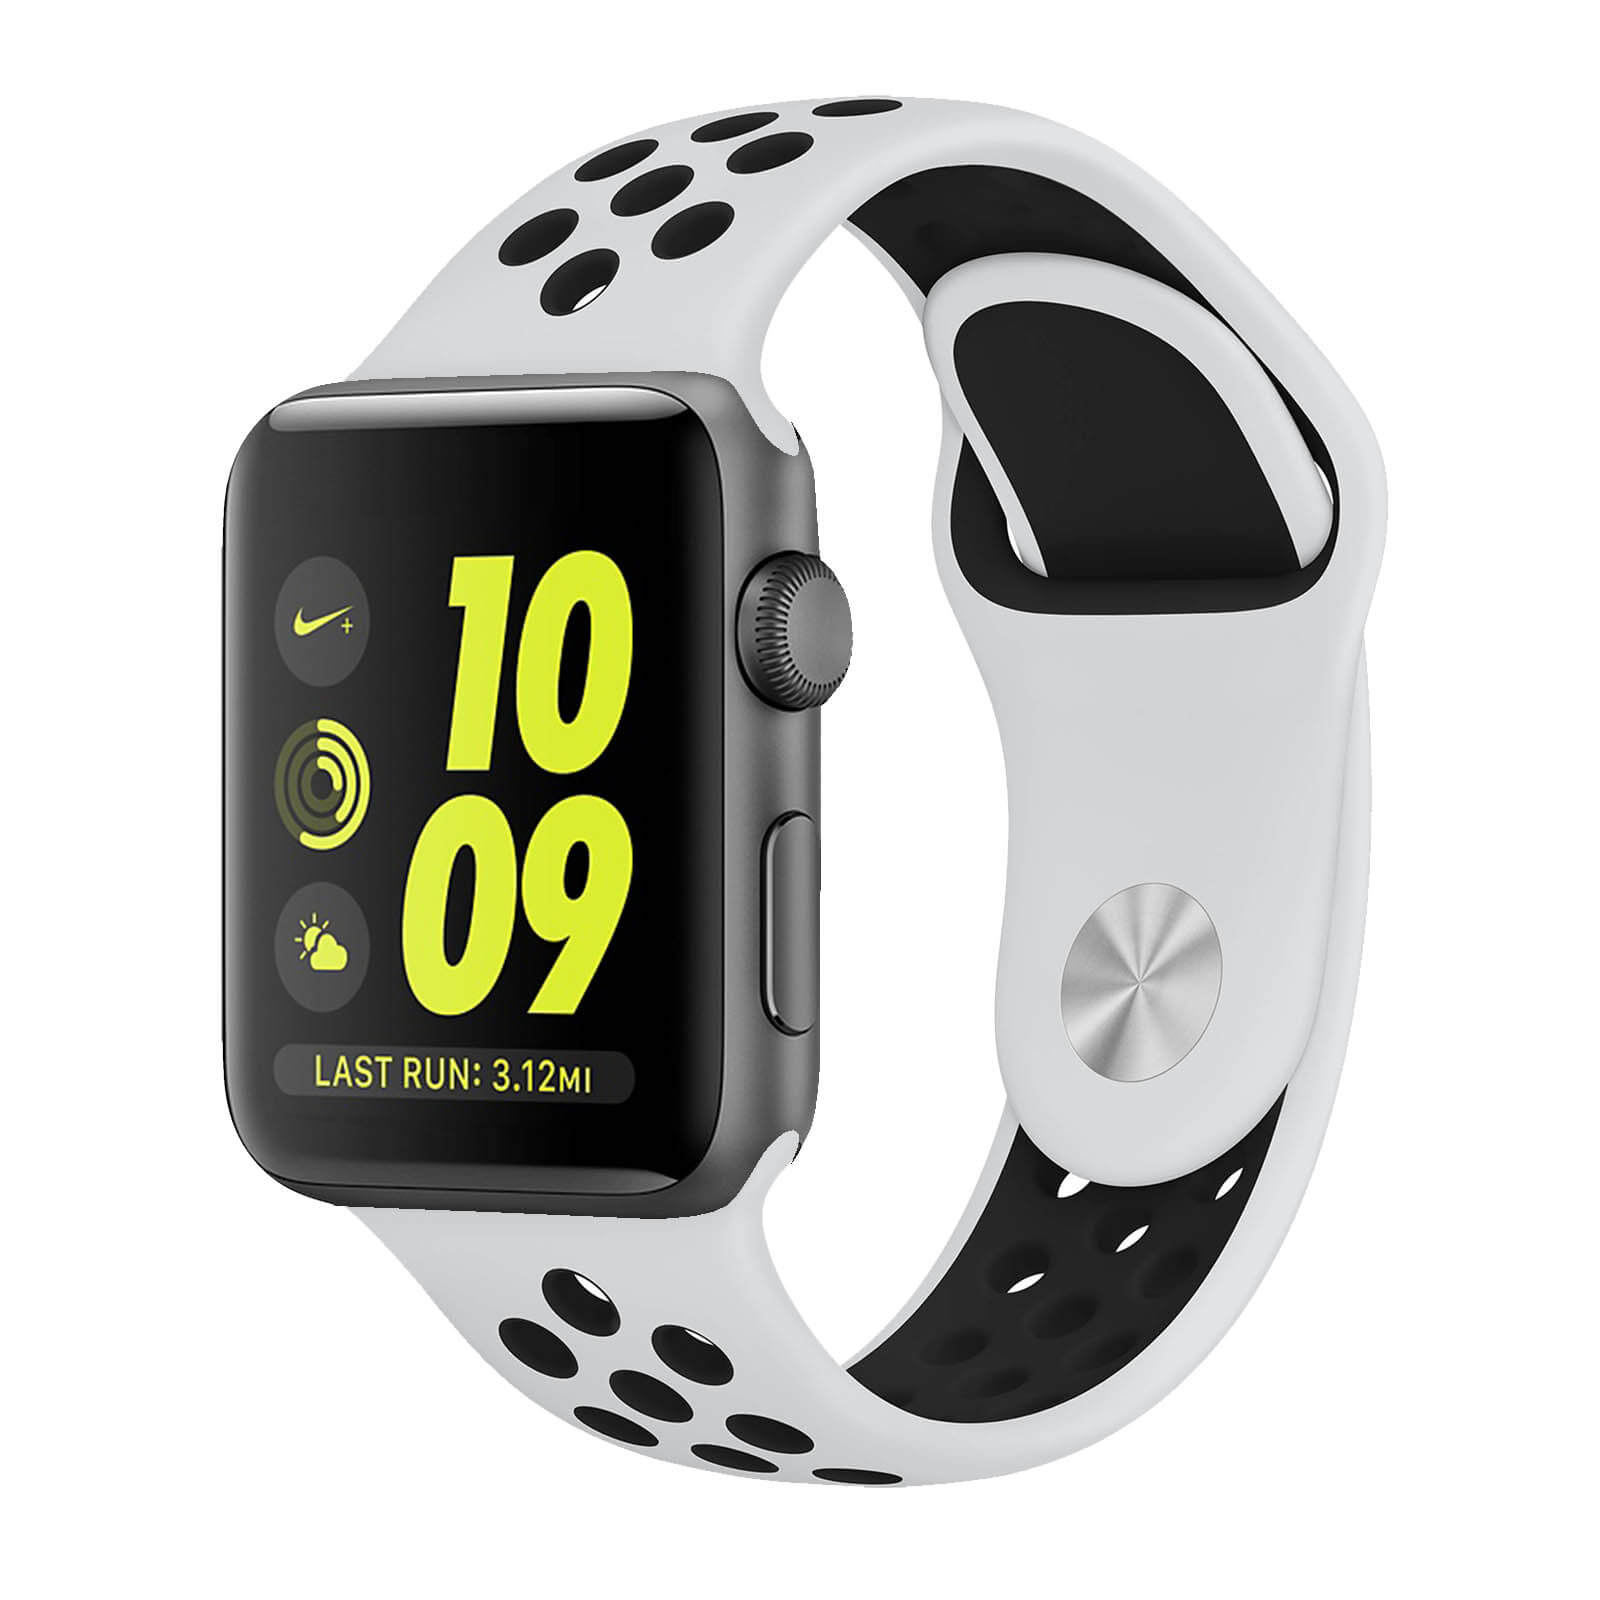 Apple Watch Series 2 Nike+ 38mm GPS WiFi Grau